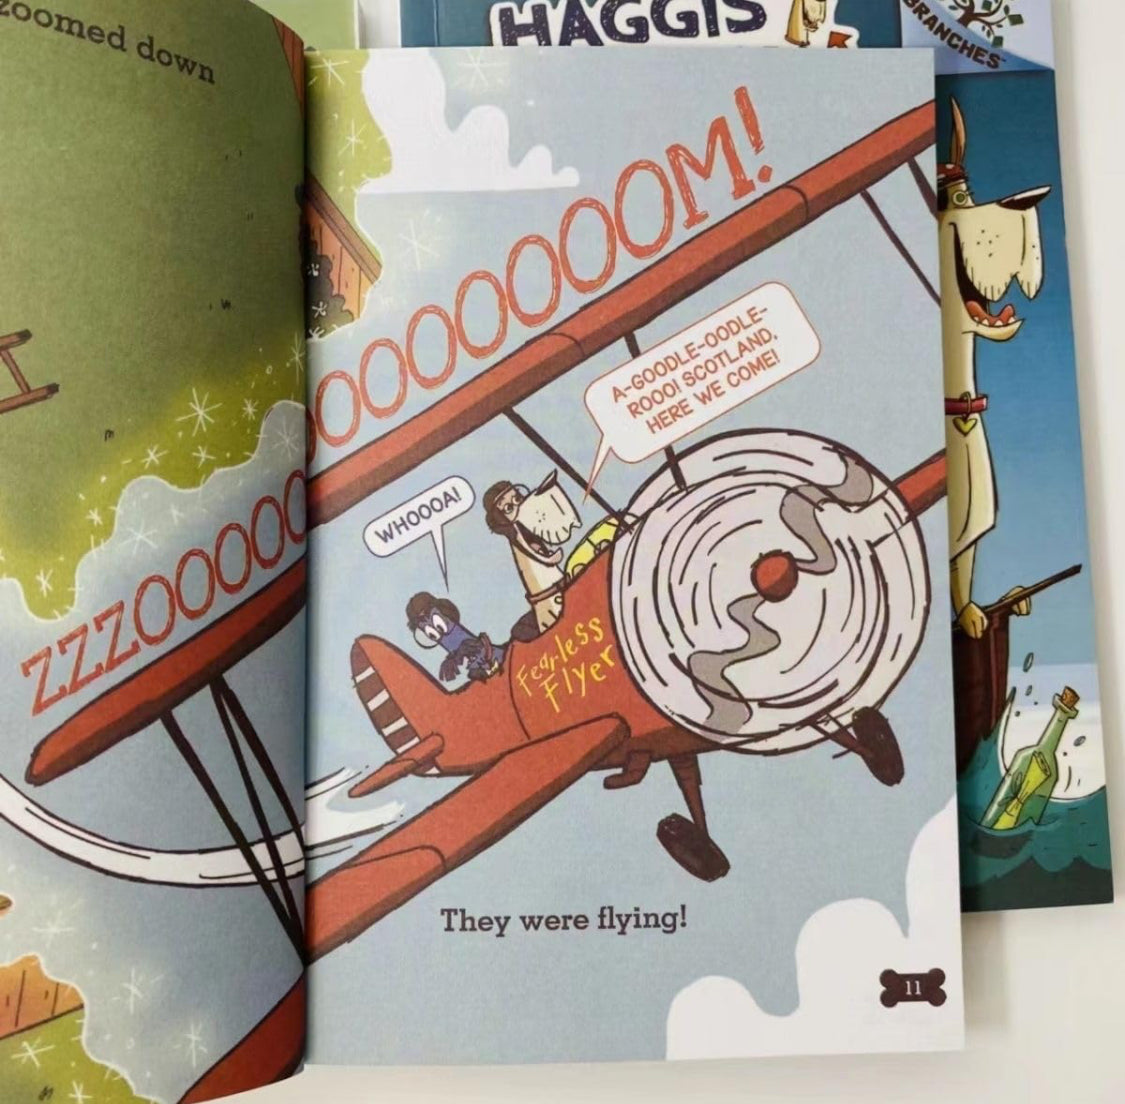 Haggis and Tank Unleashed Three English Learning Music Books (3 books)